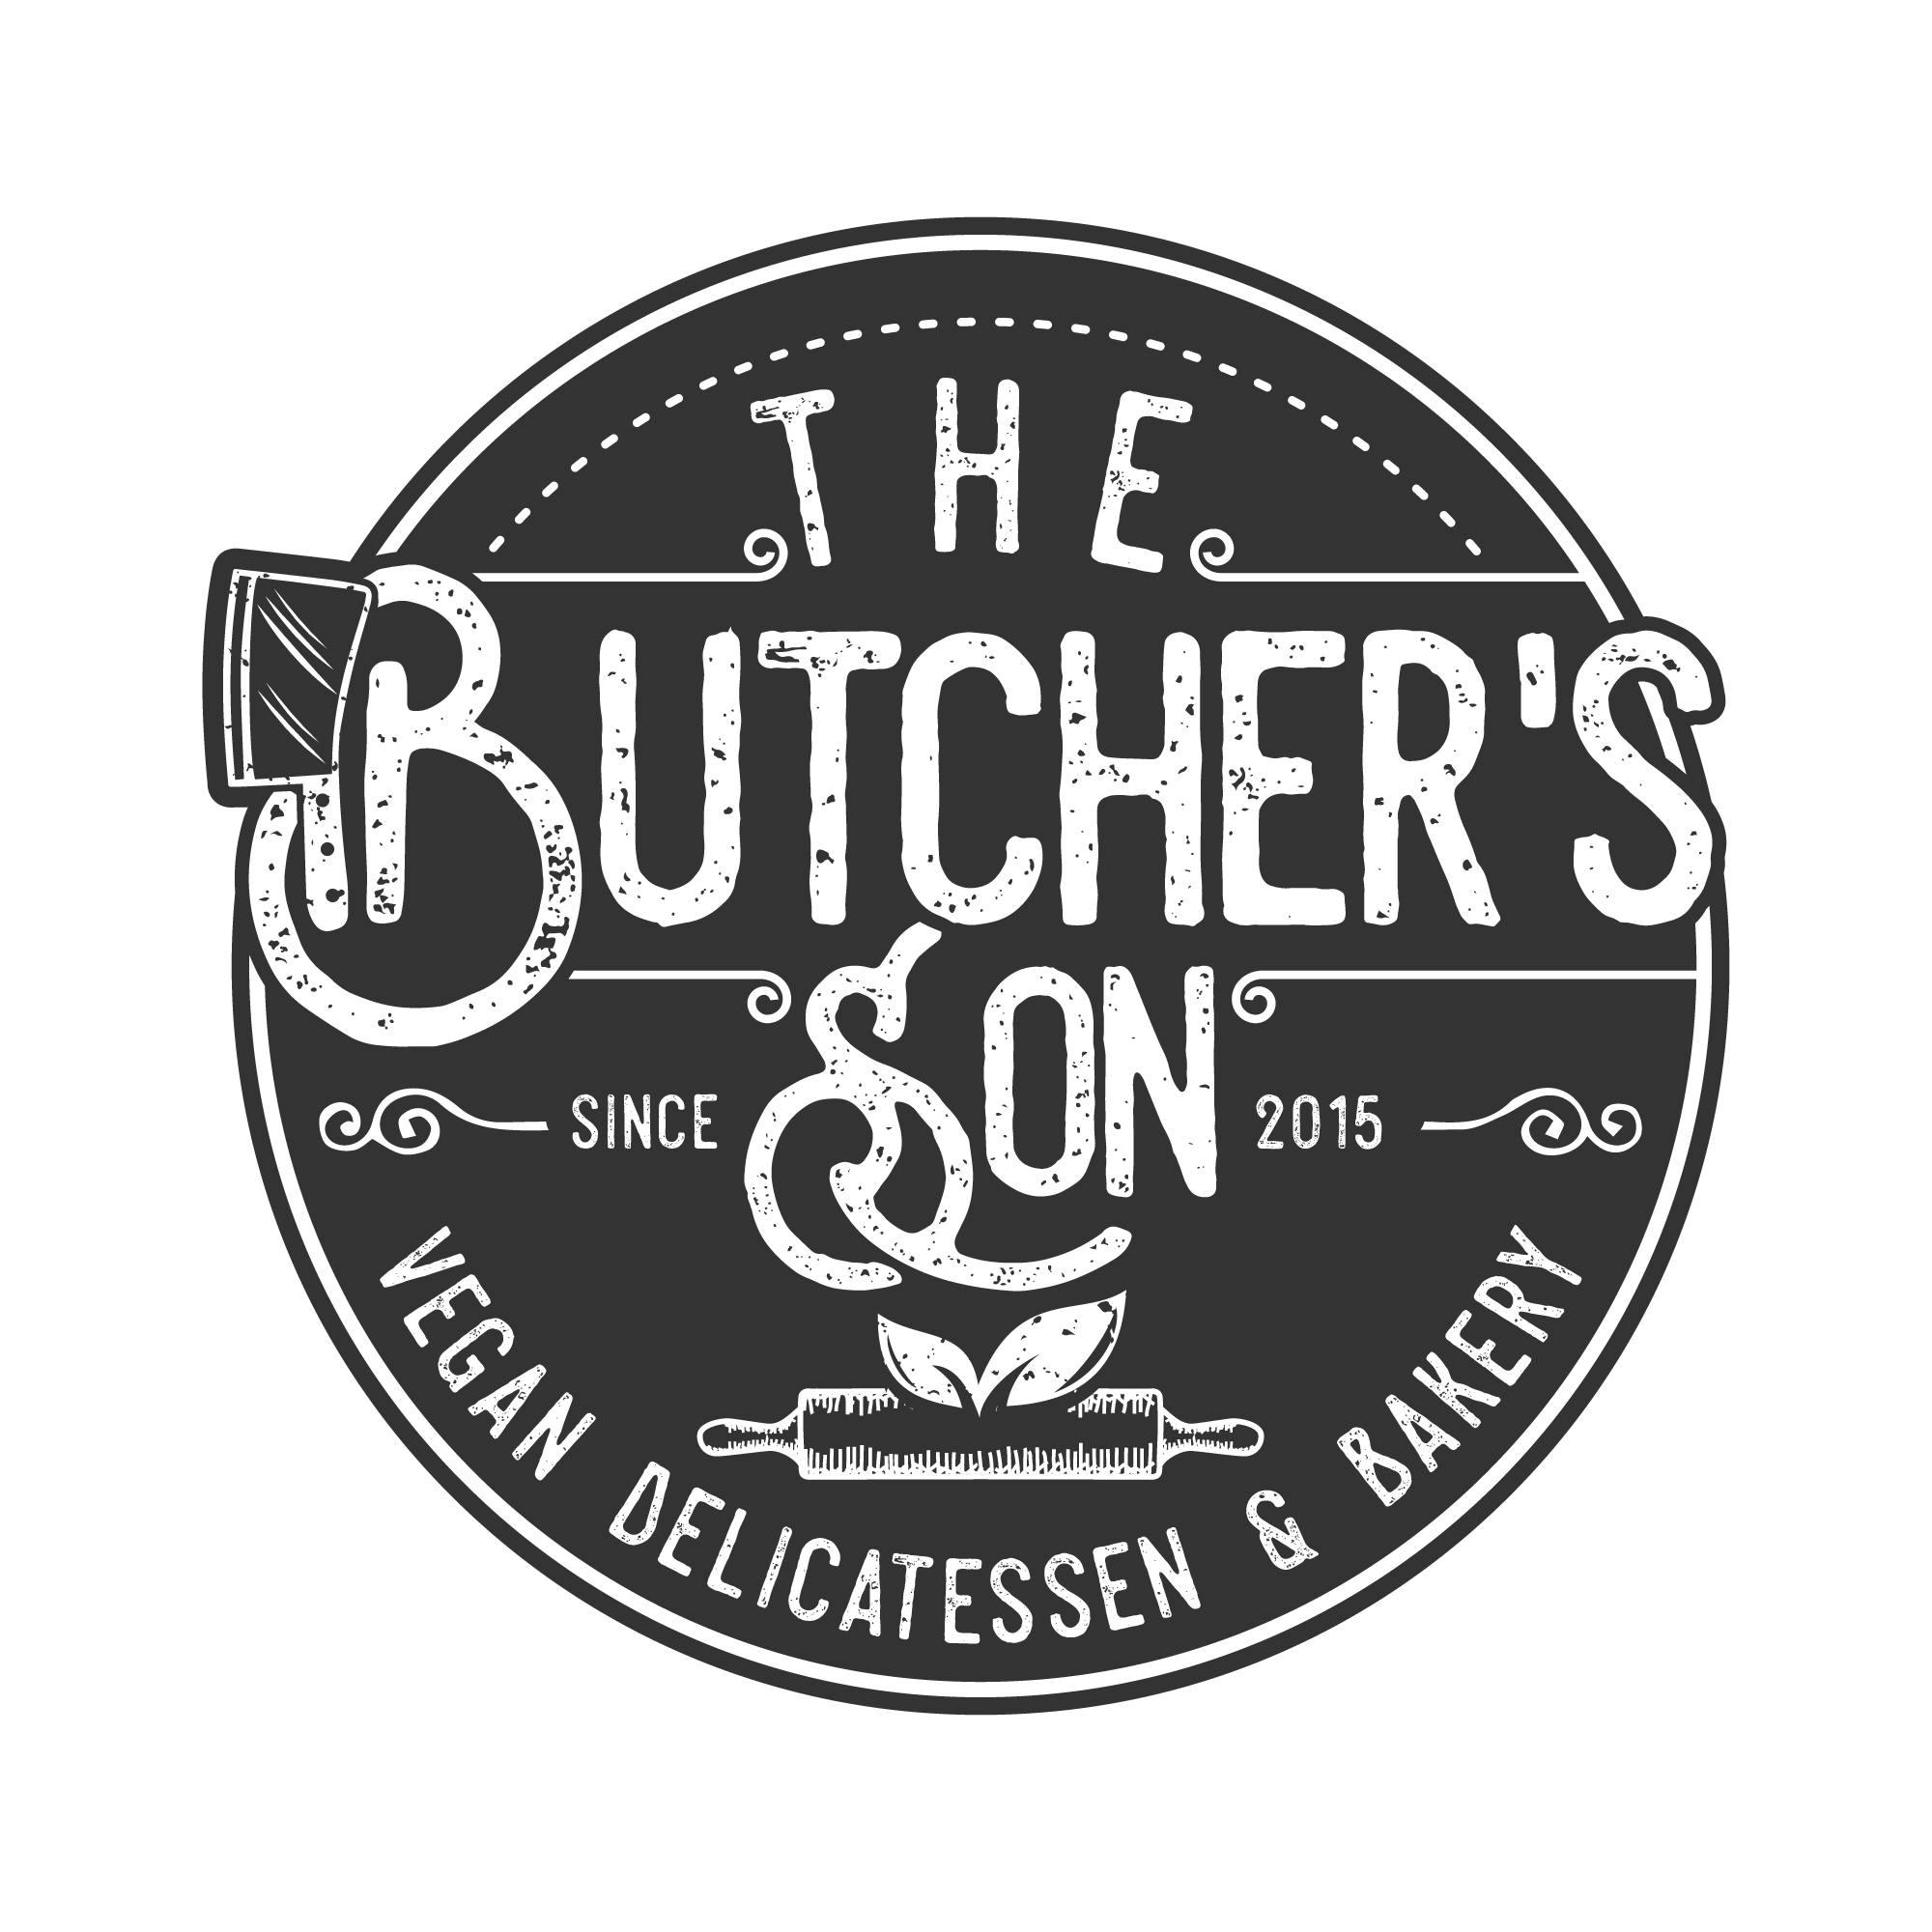 The Butcher’s Son Vegan Delicatessen & Bakery